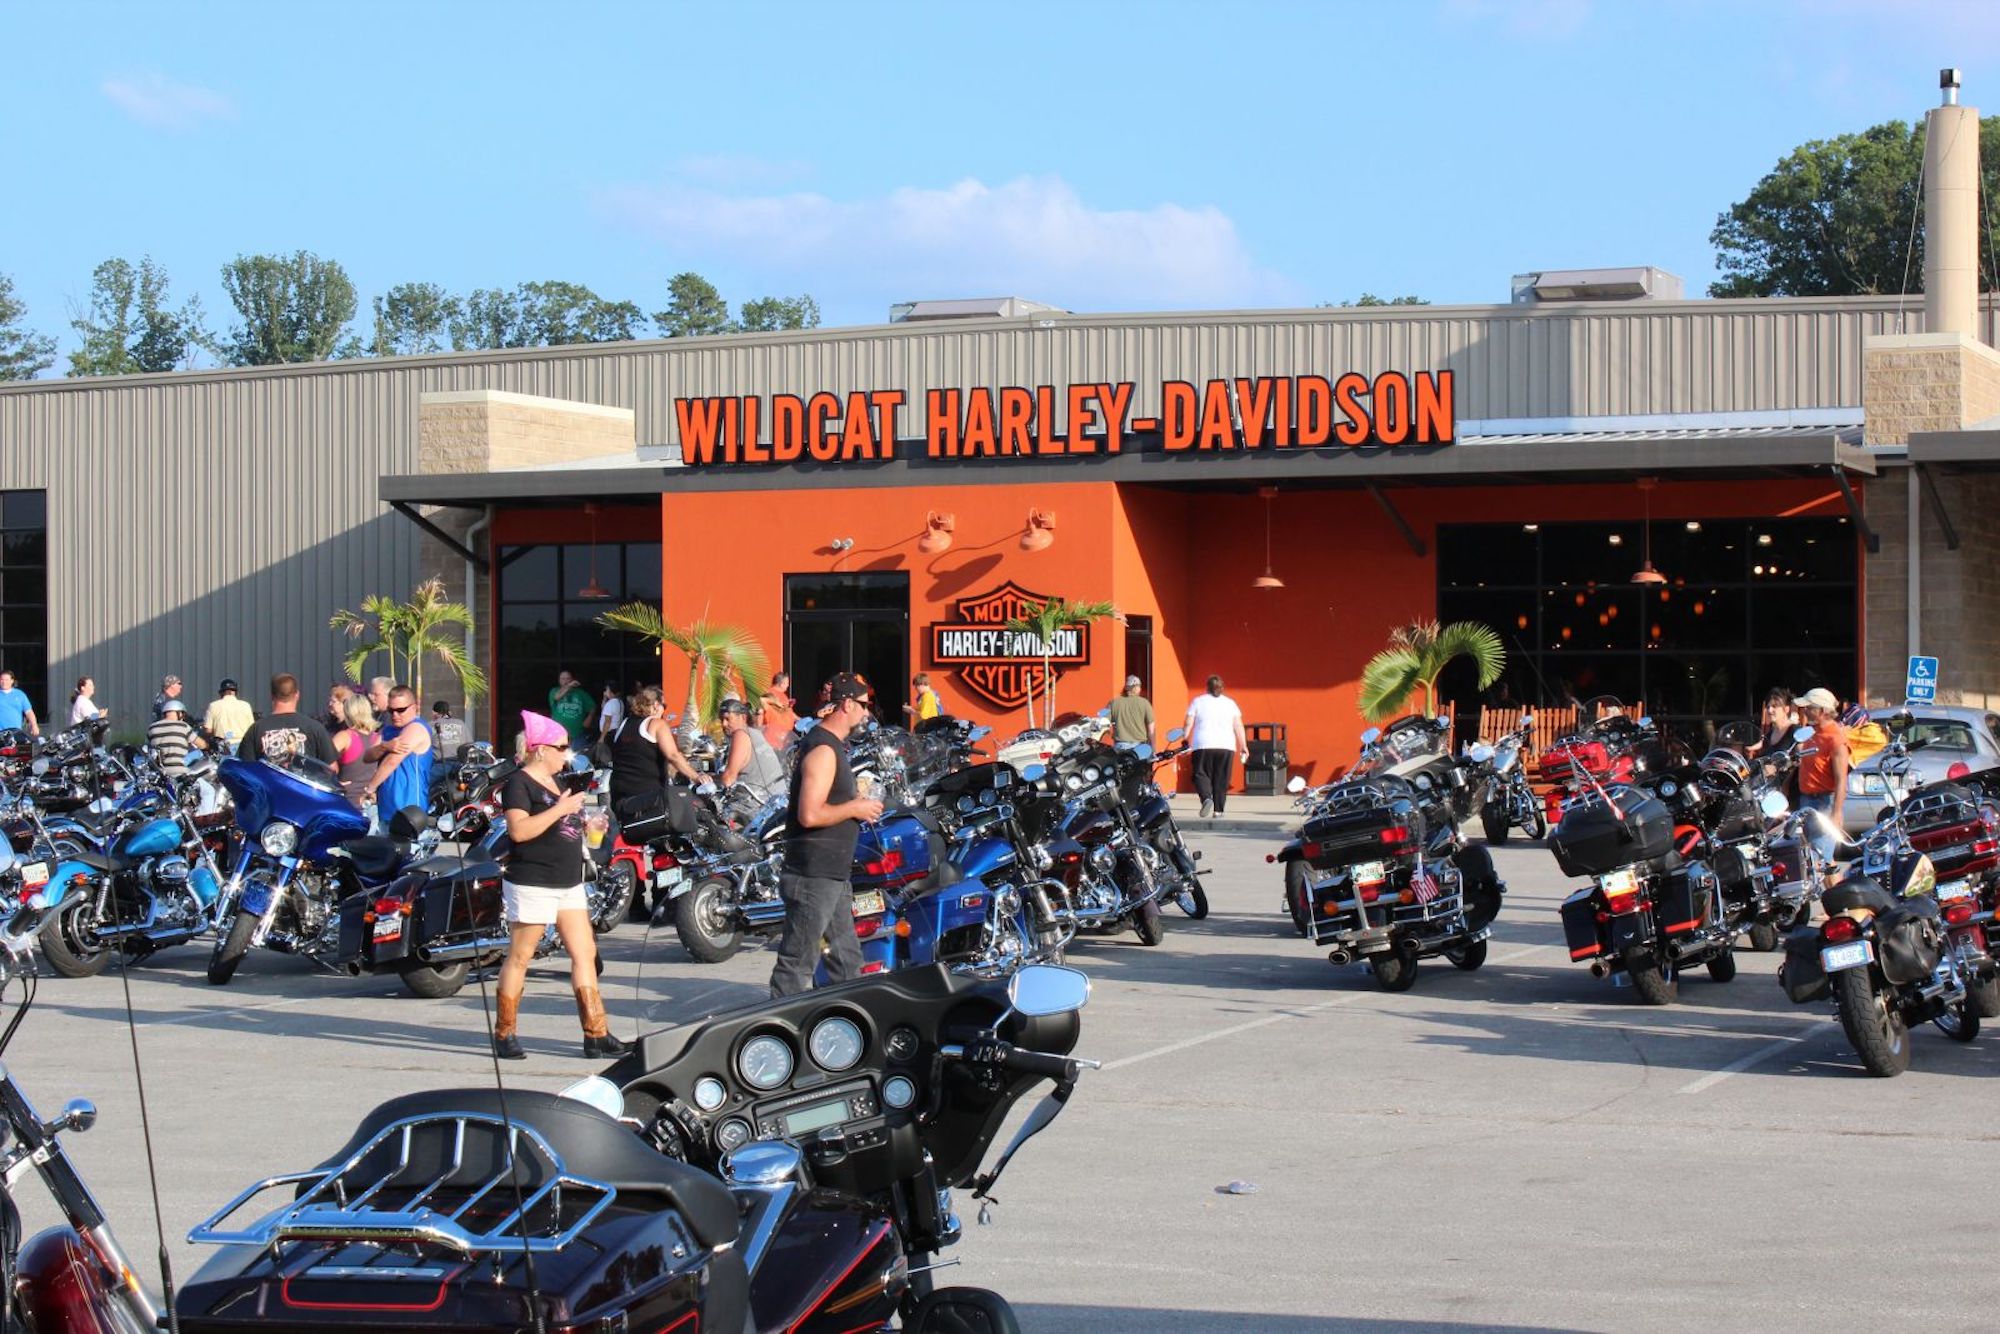 Harley's Wildcat dealership location. Media sourced from Wildcat Harley-Davidson.